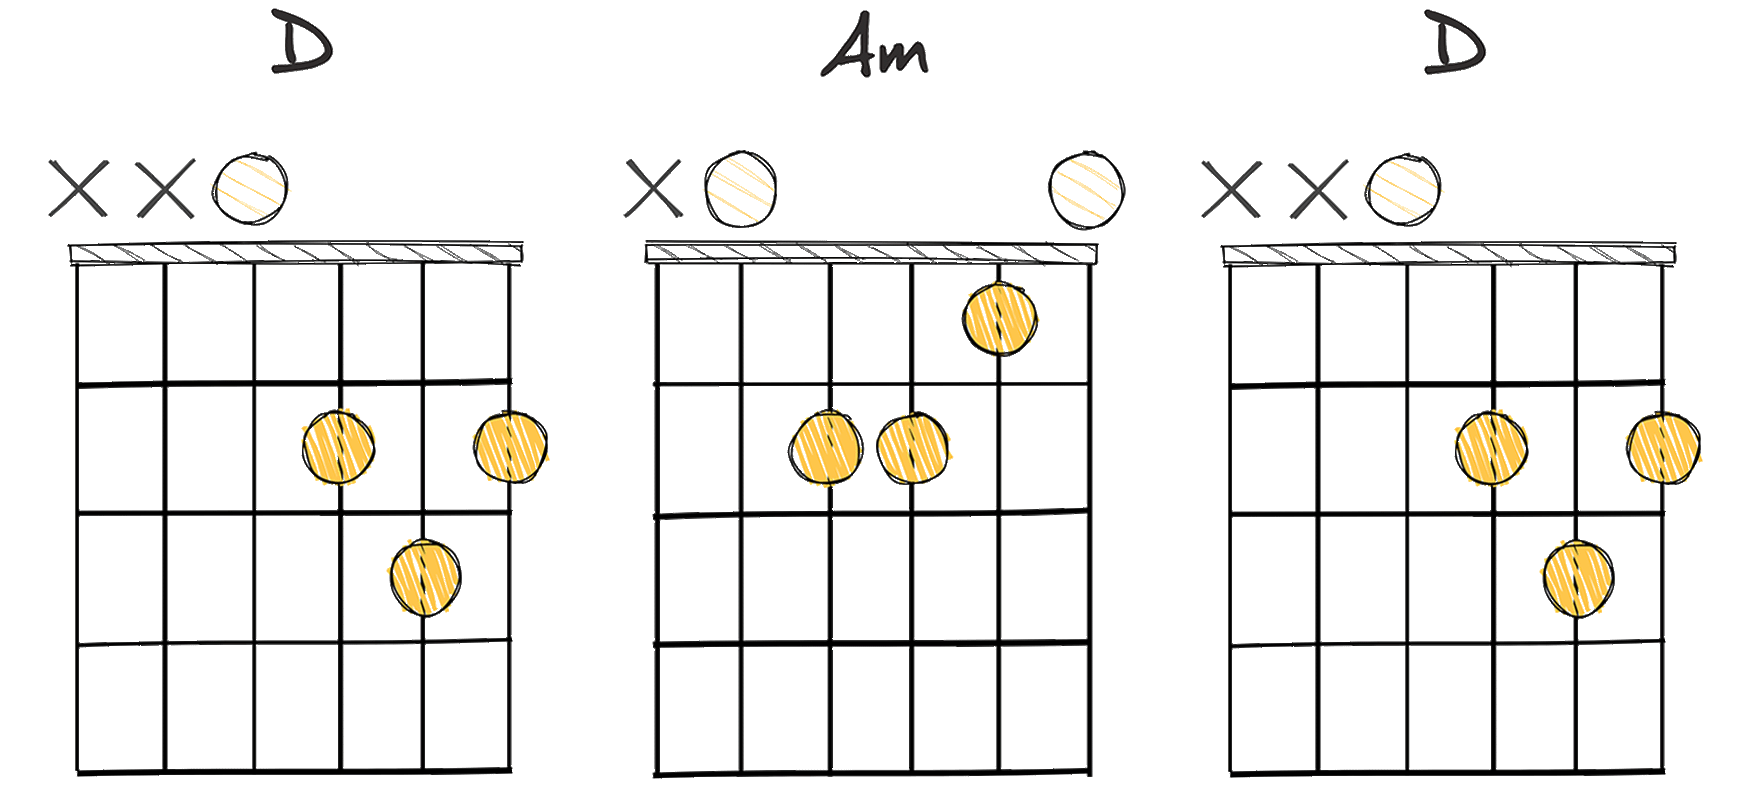 v-ii-V (5-2-5) chords diagram